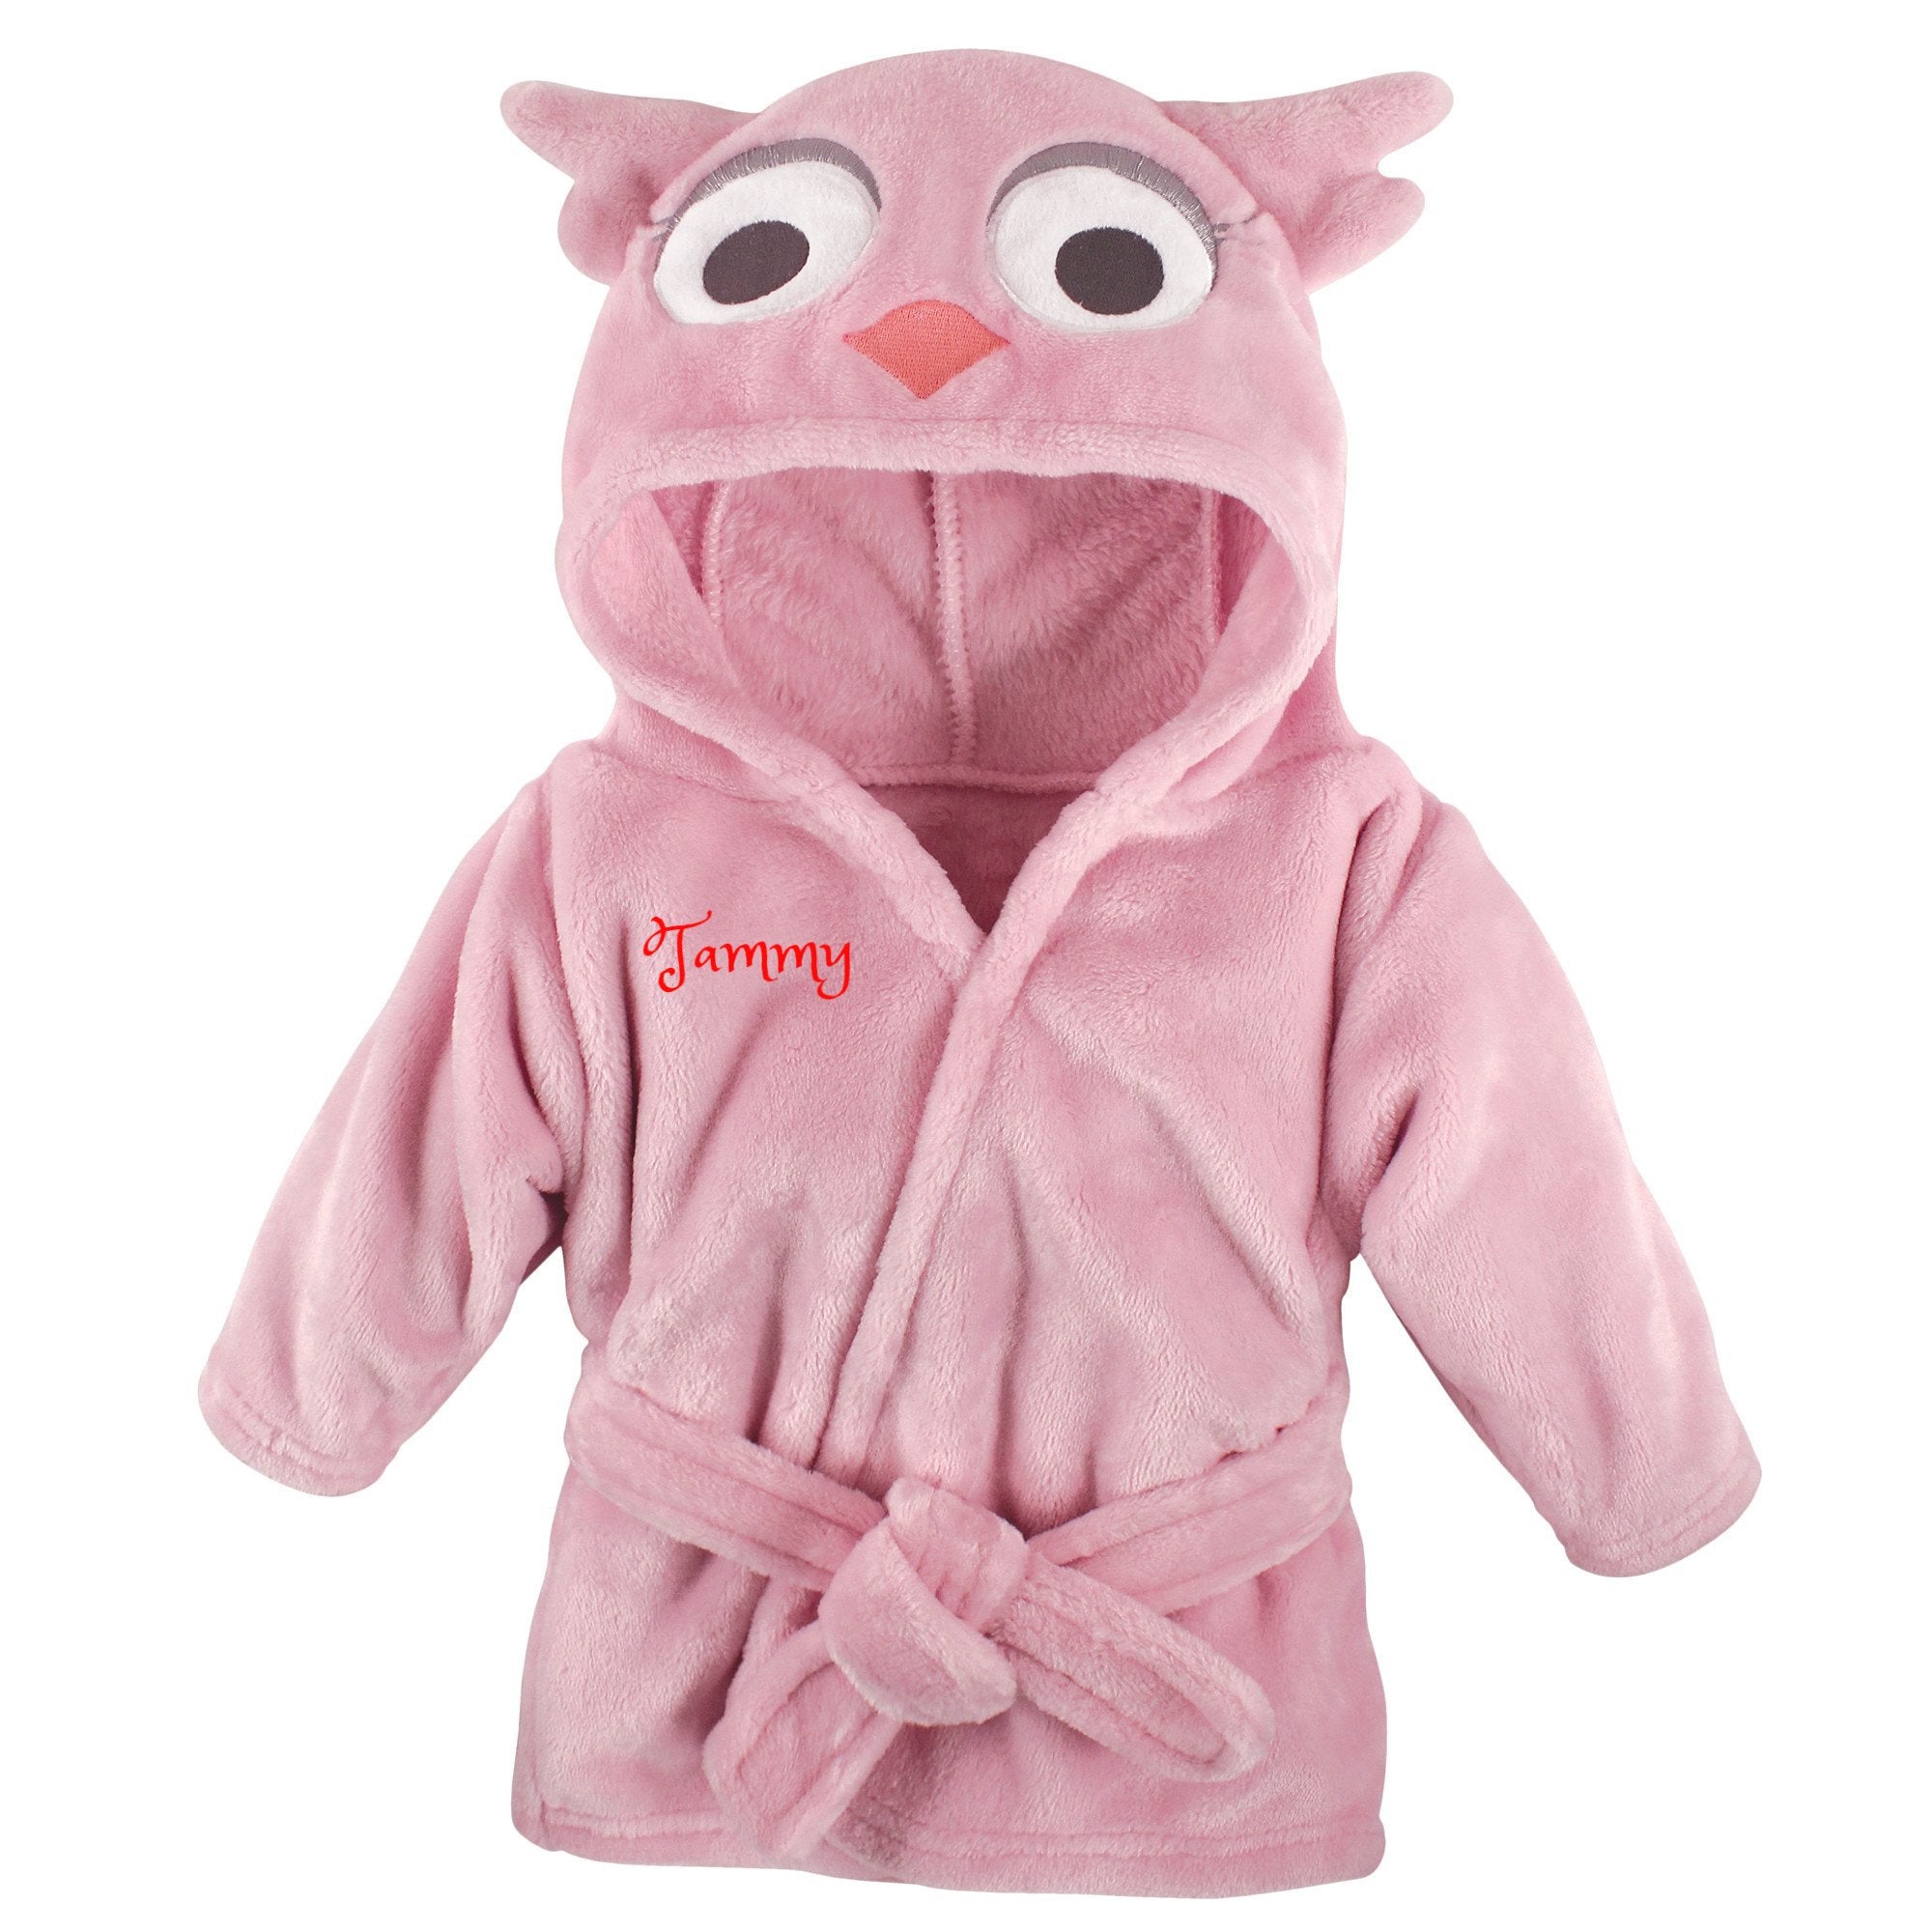 Personalized Plush Baby Bathrobe -Pink Owl